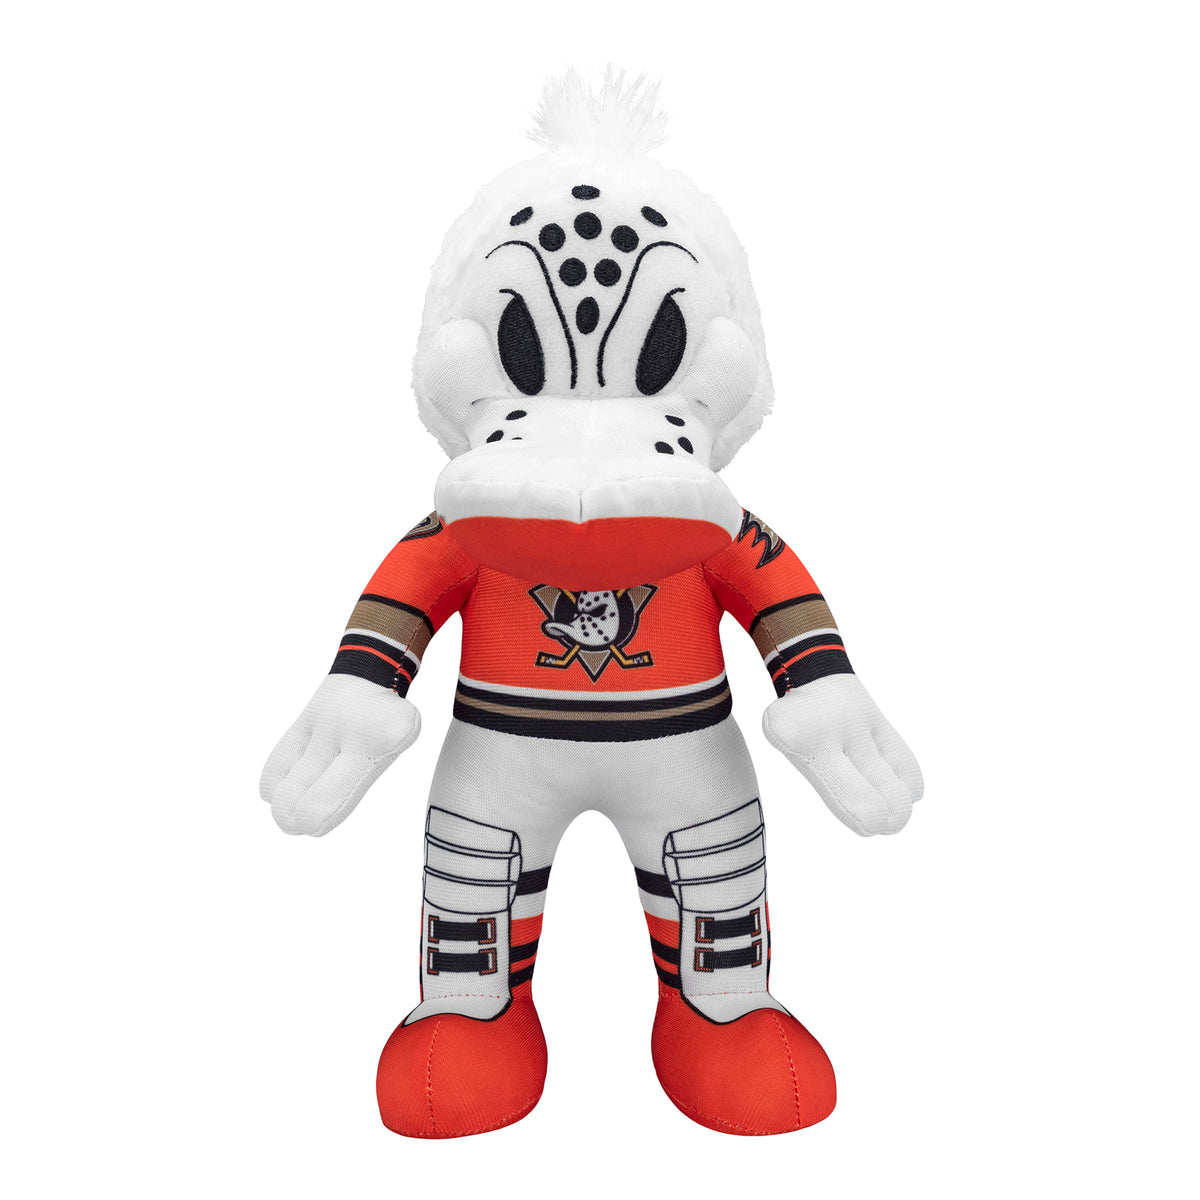 Anaheim Ducks Wild Wing 10&quot; Mascot Plush Figure (Orange)